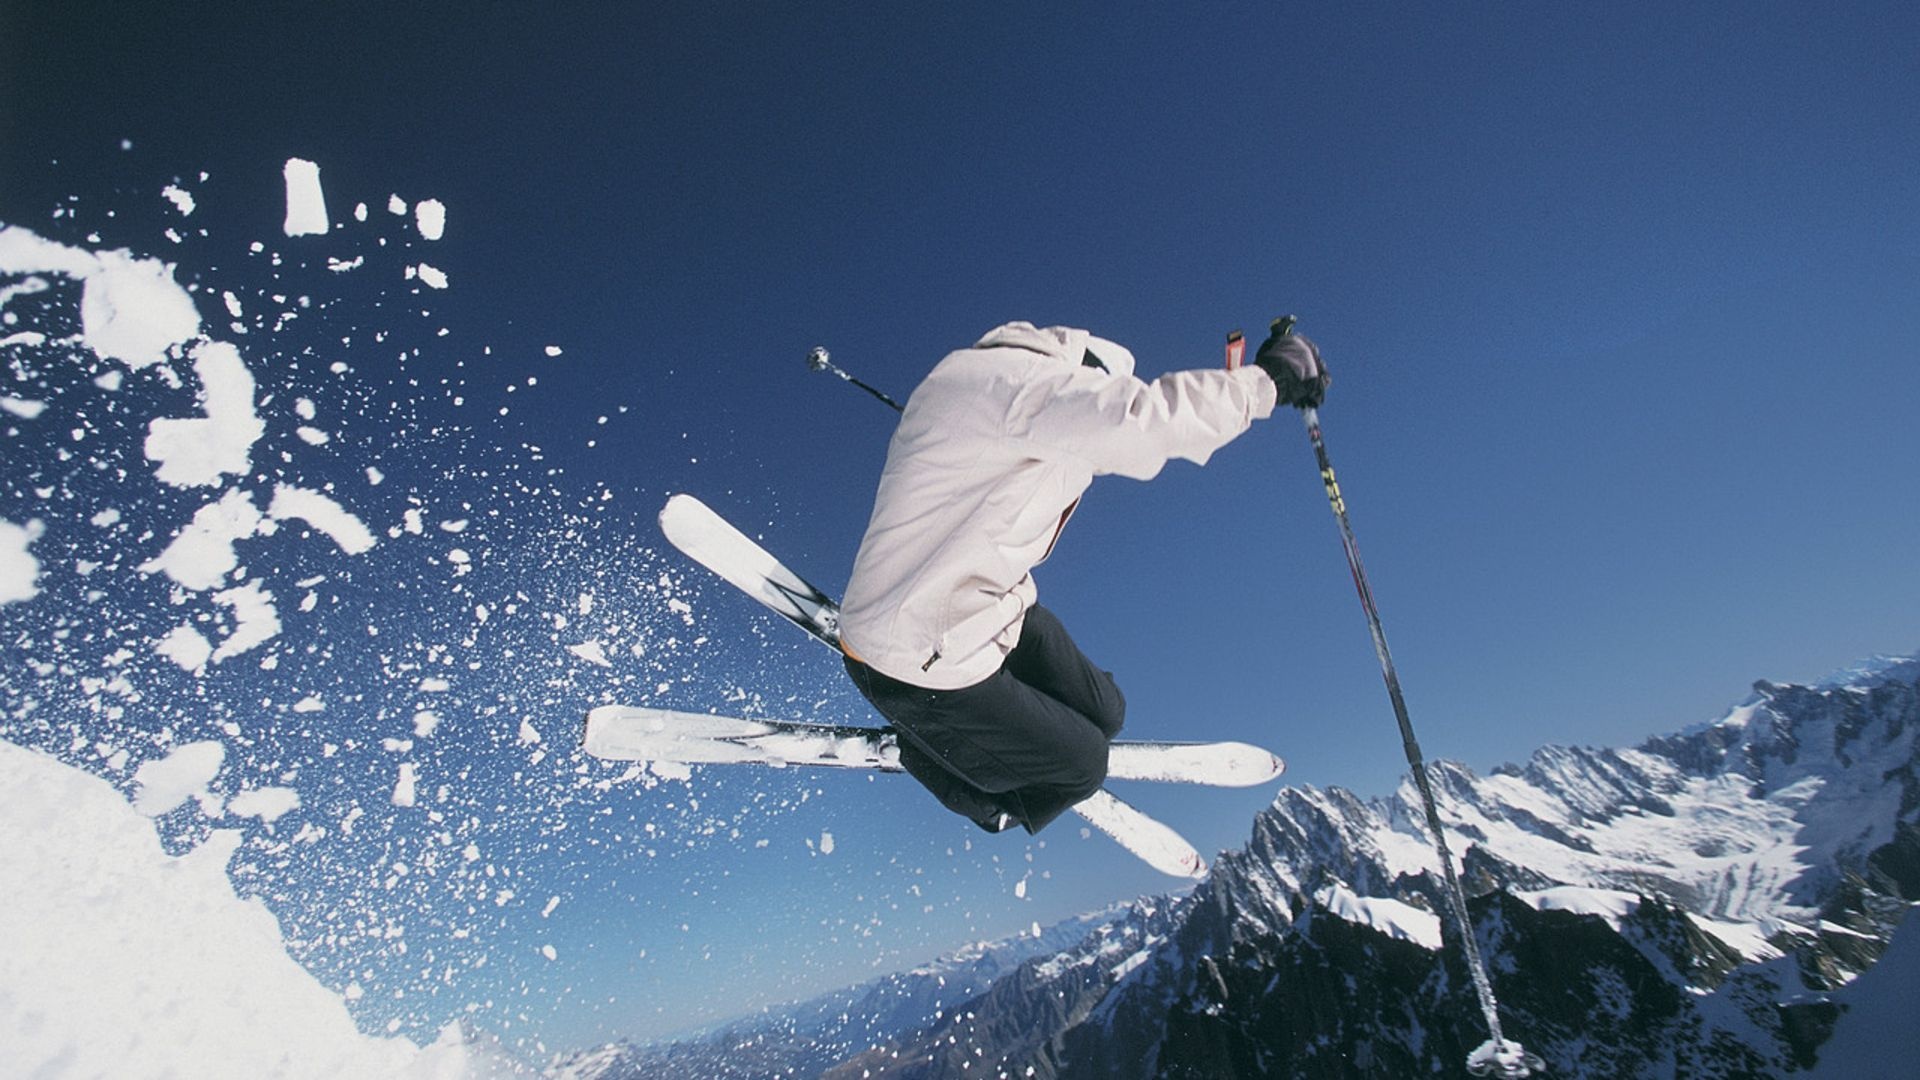 Alpine skiing sports, HD skiing backgrounds, 1920x1080 Full HD Desktop